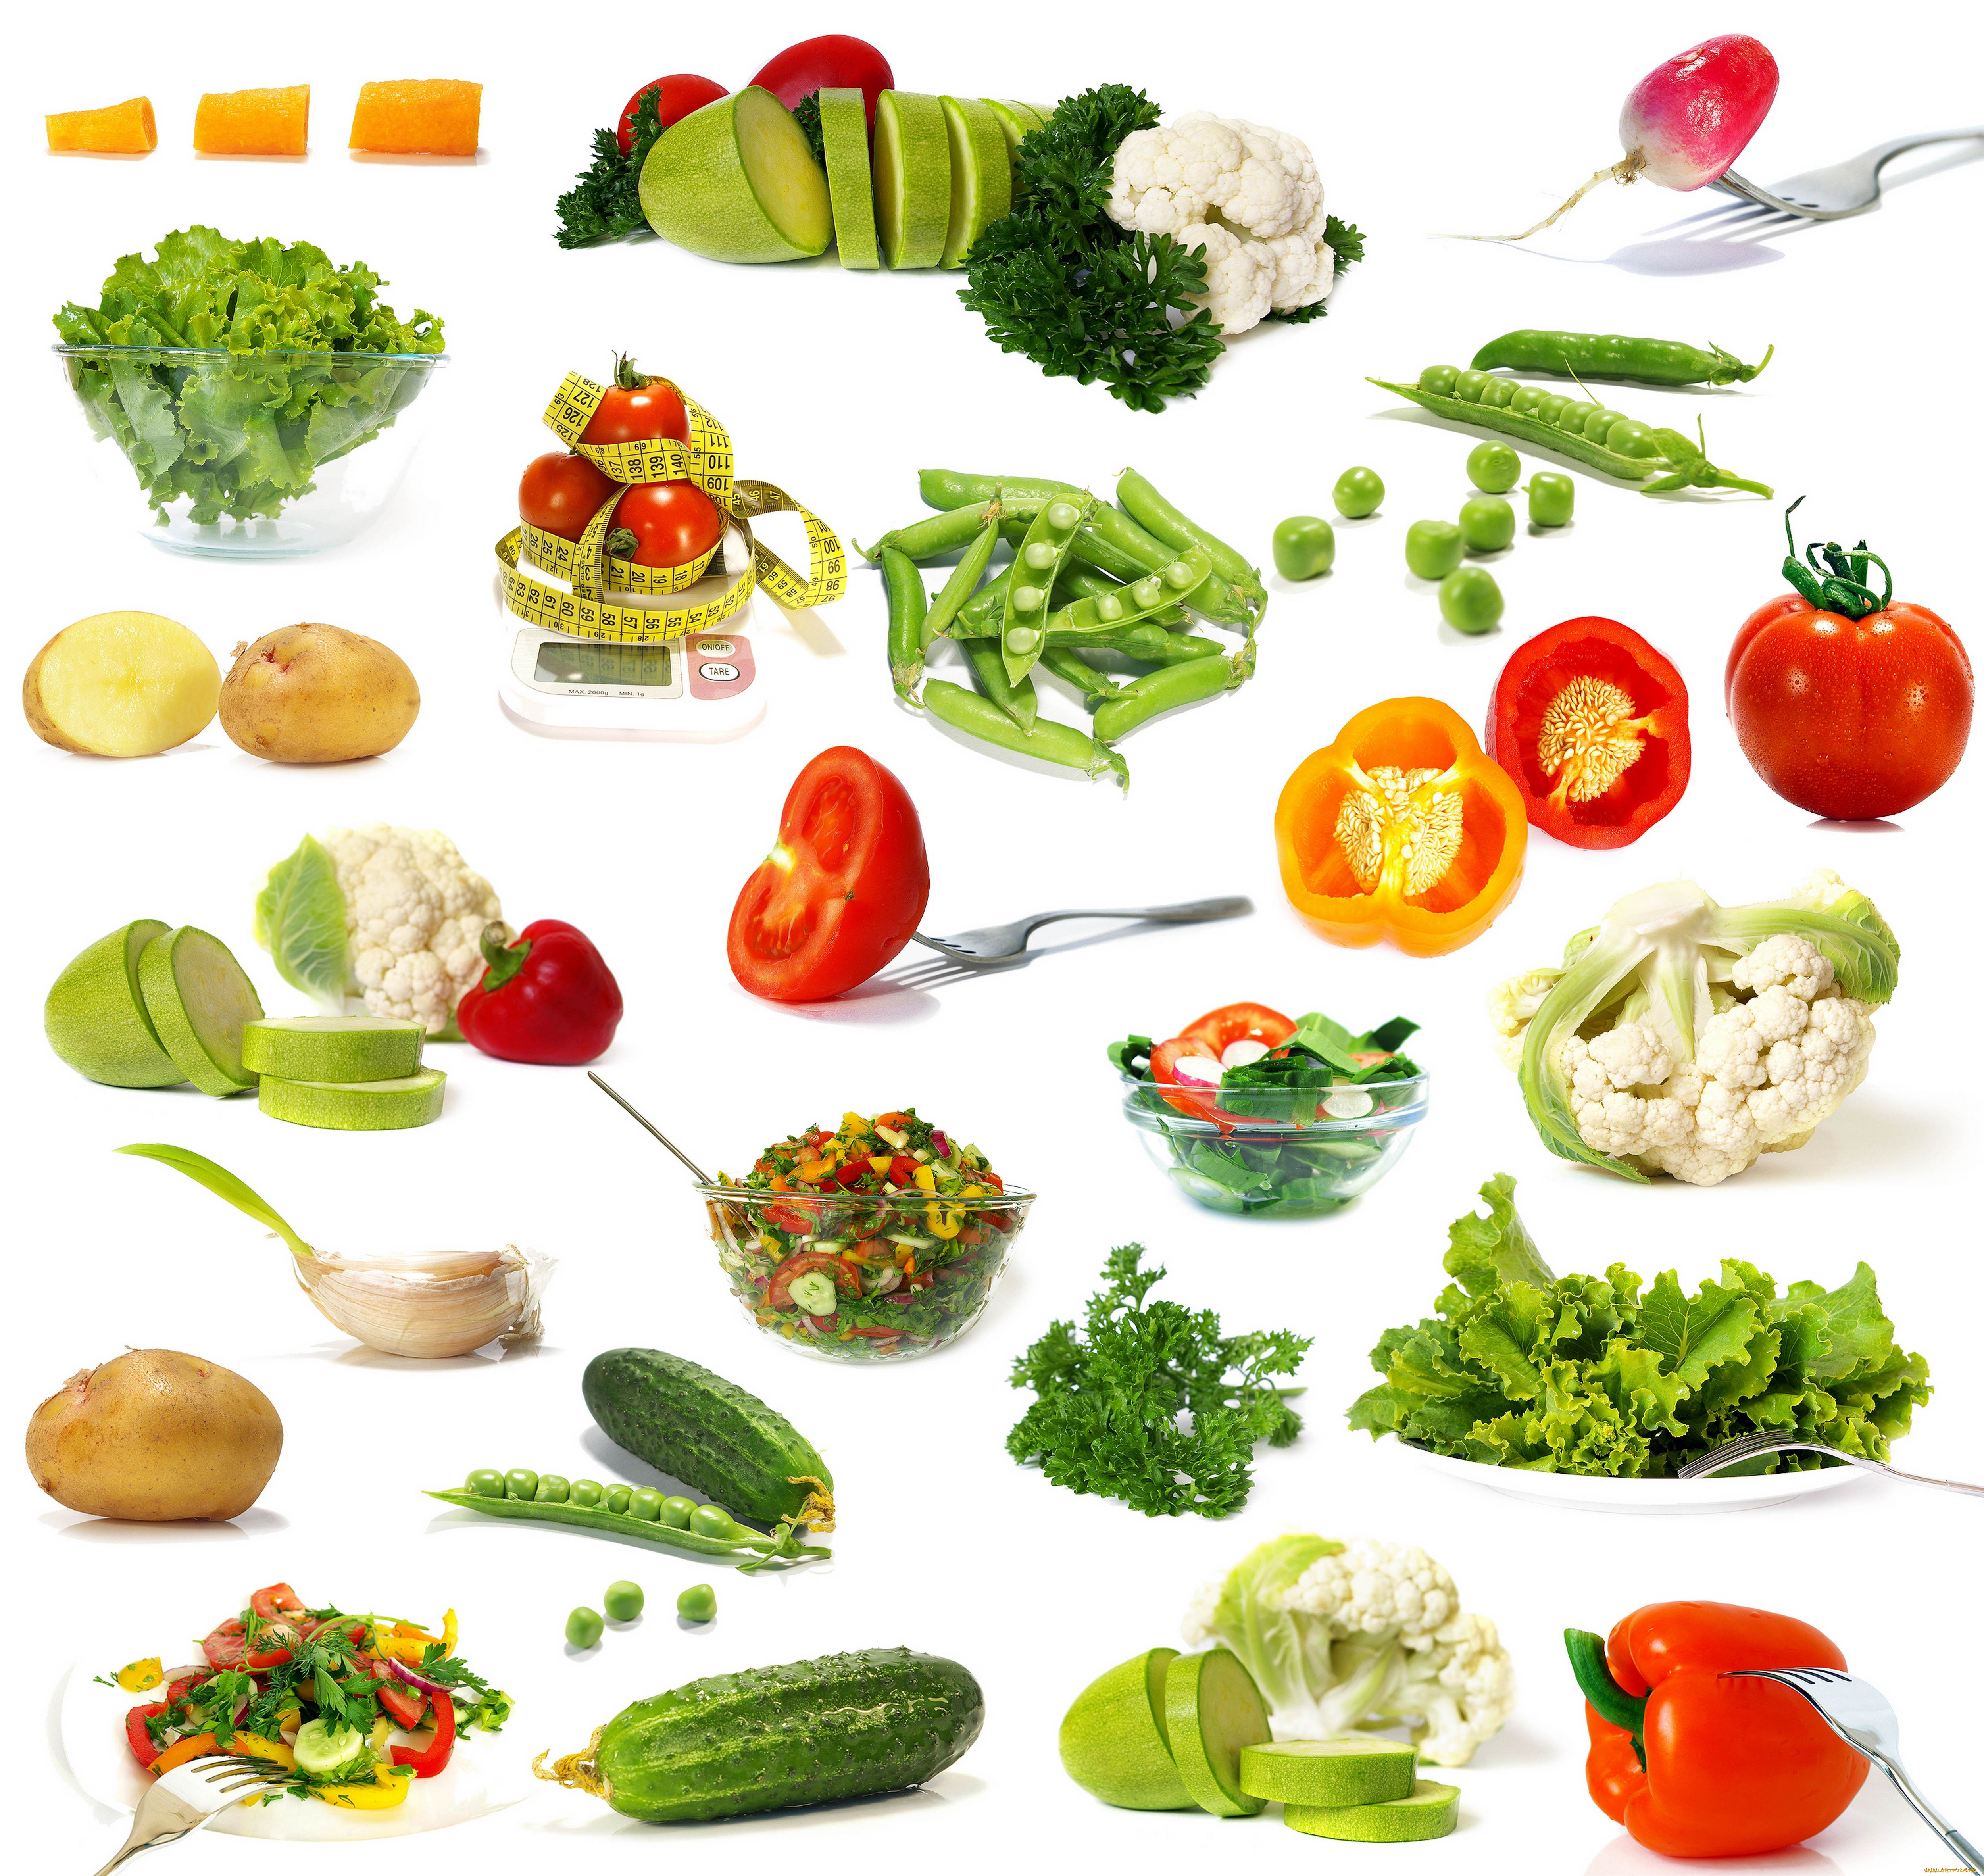 еда, овощи, коллаж, зелень, белый, фон, диета, редиска, салат, огурец, огурцы, томаты